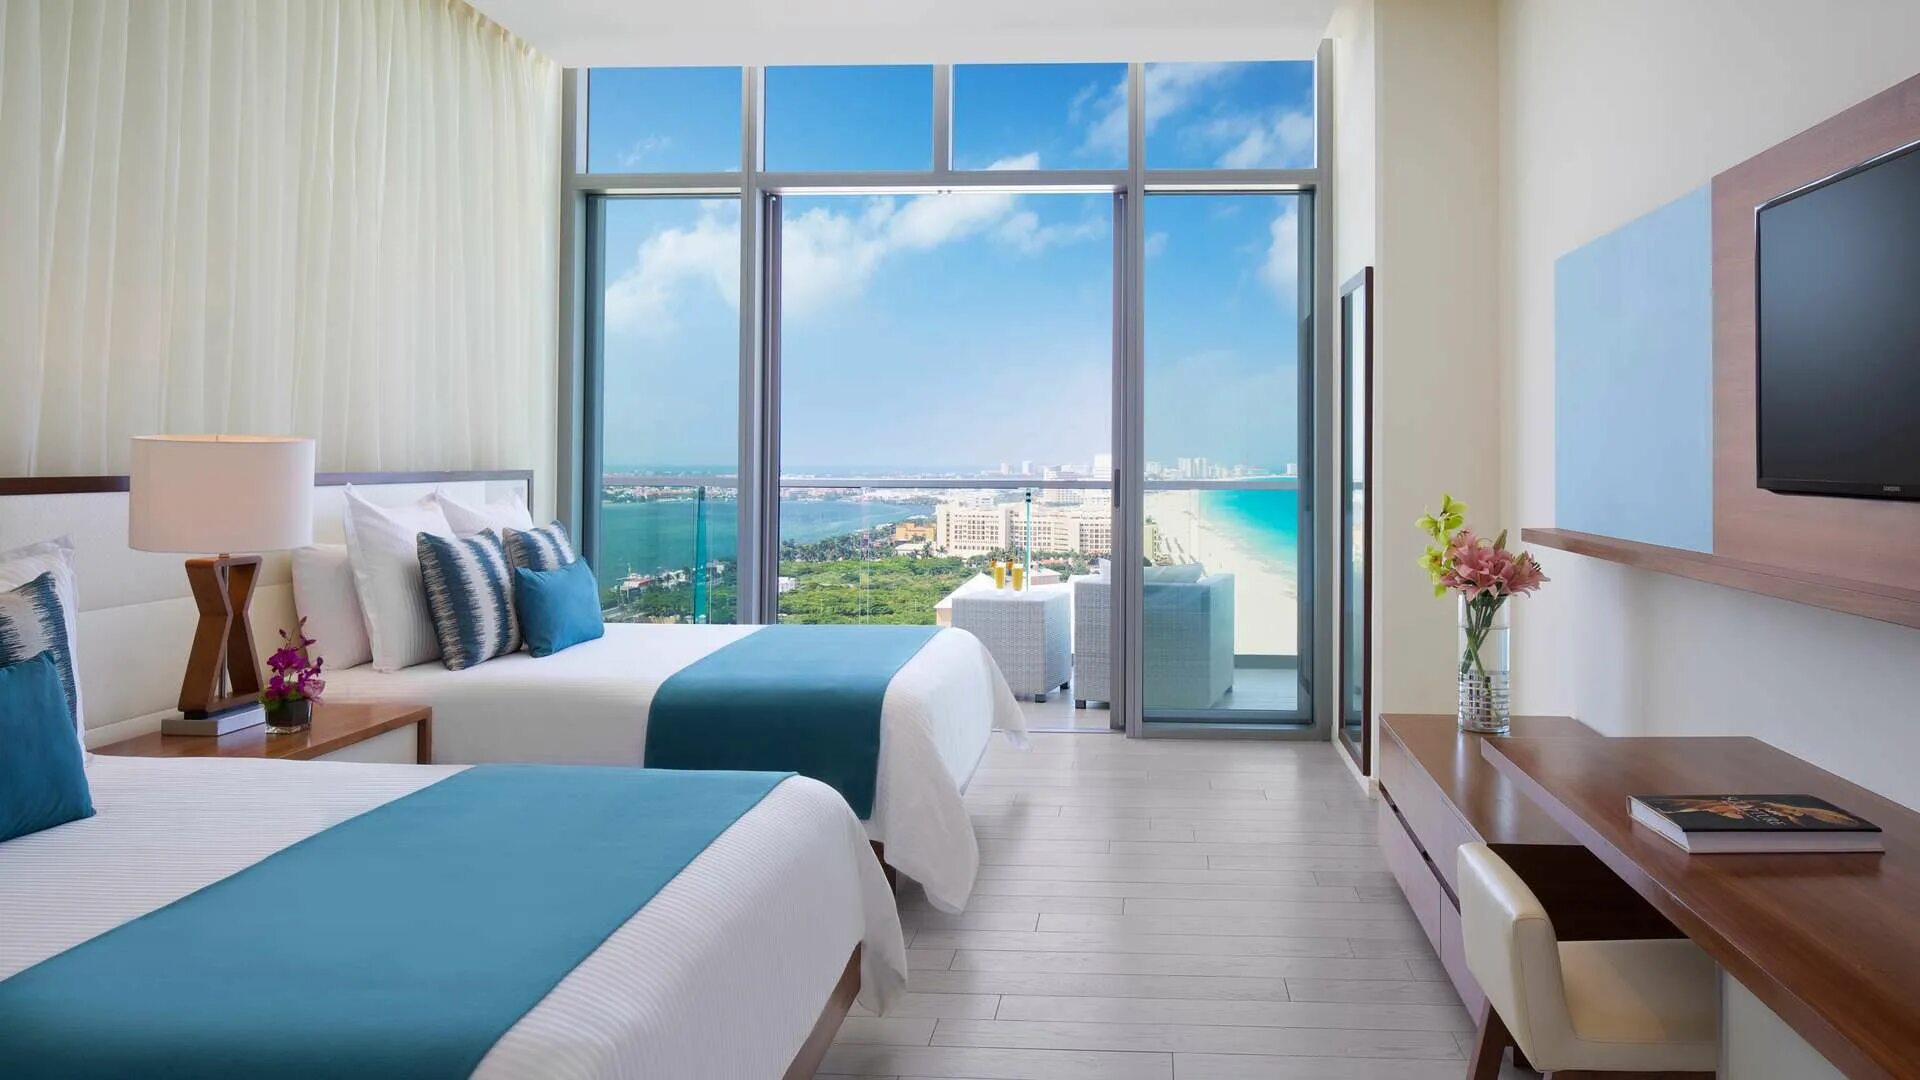 Deluxe Room Ocean view. Secrets the Vine Cancun. Ja Ocean view Hotel 5. Secrets Hotels Mexico.